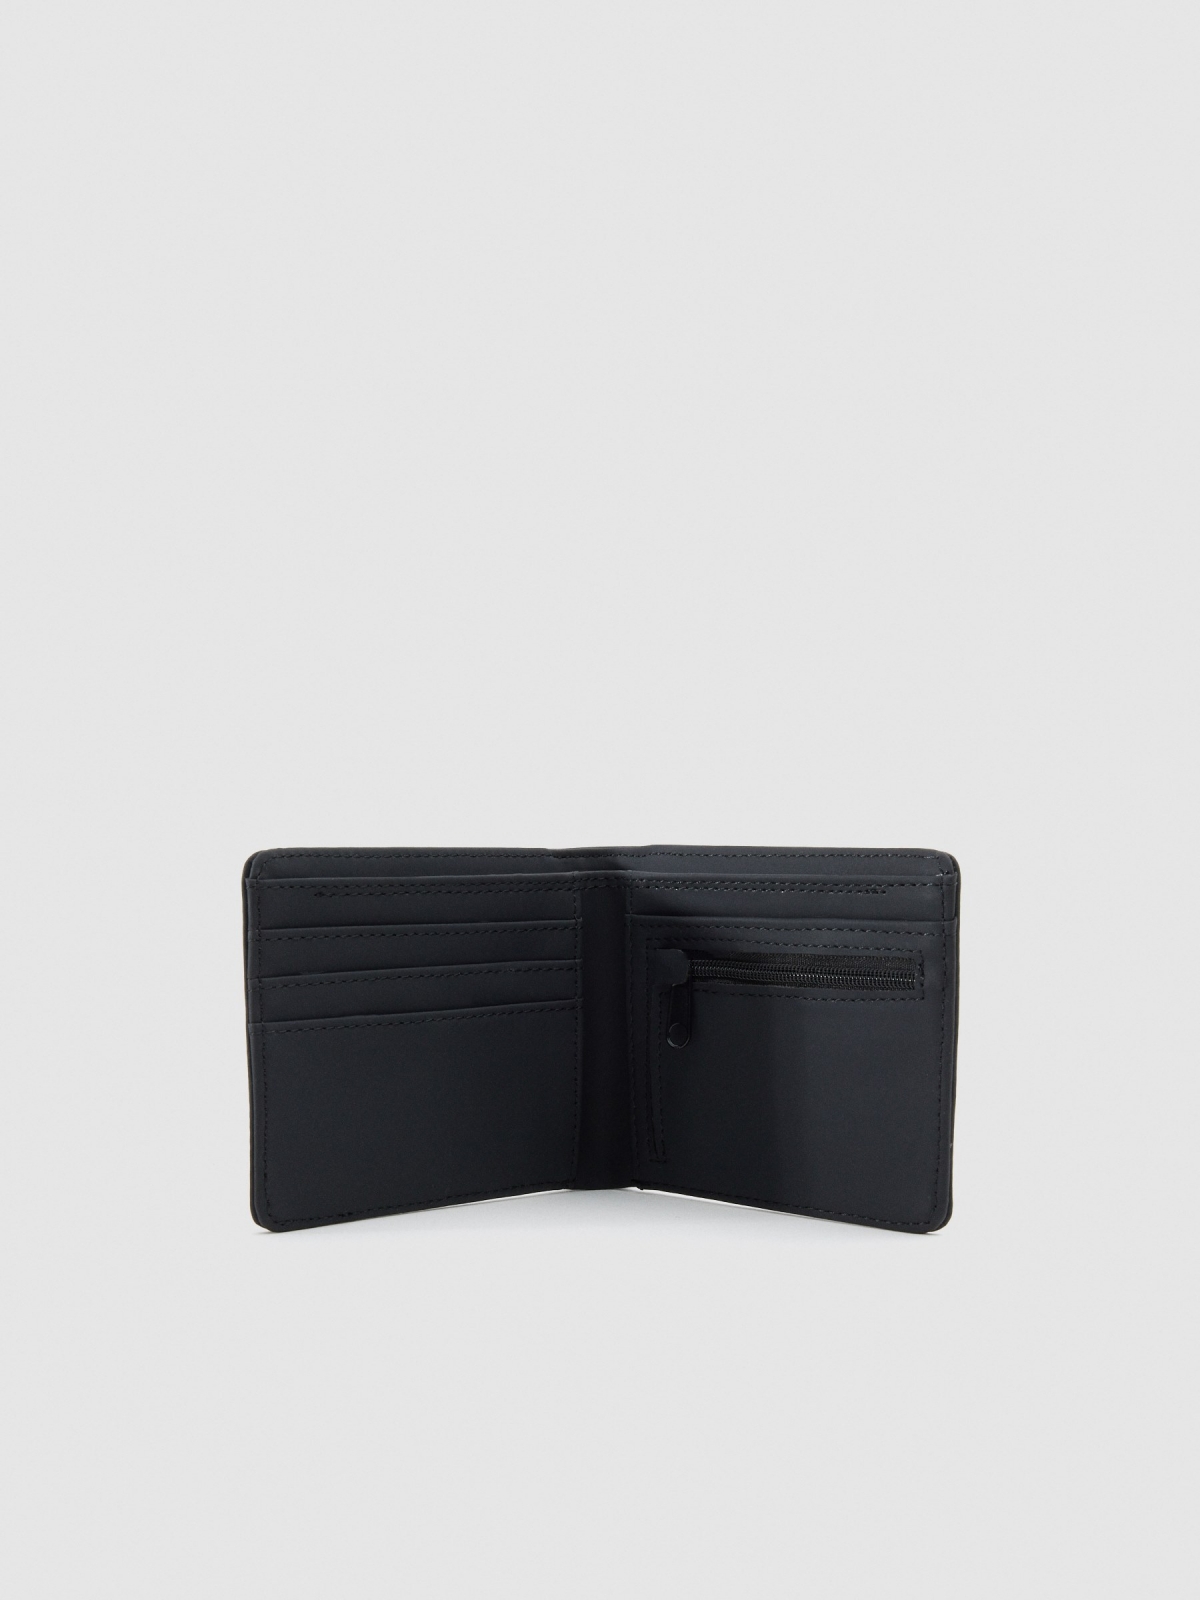 Leatherette wallet black 45º side view